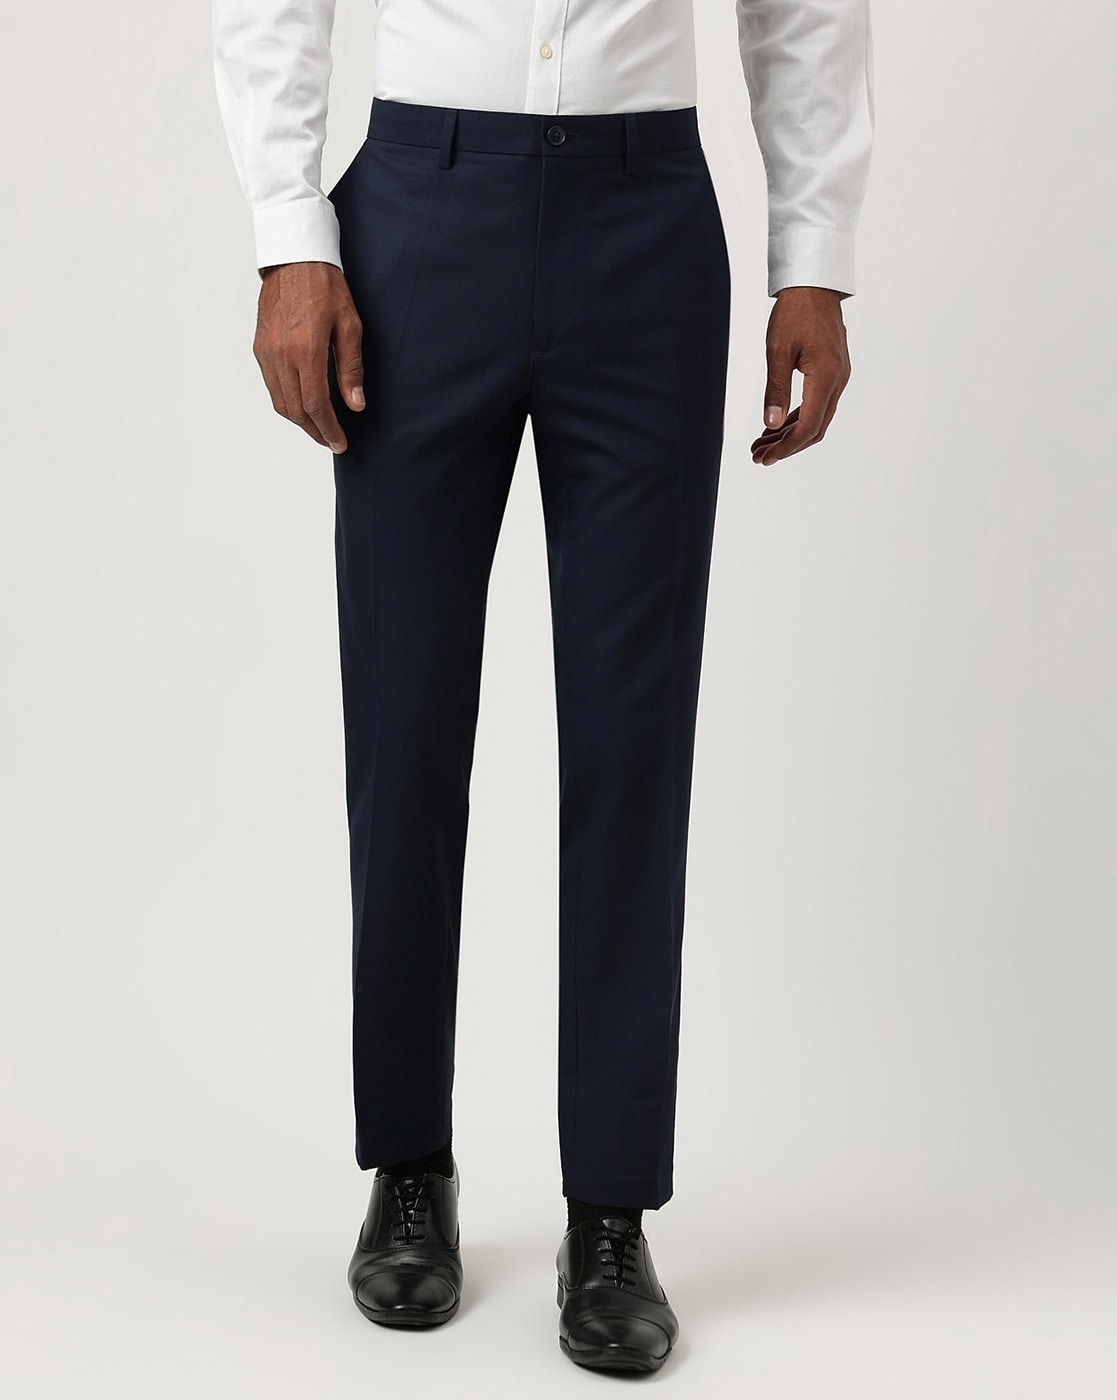 Buy Men Navy Blue Slim Fit Trouser Online in India - Monte Carlo